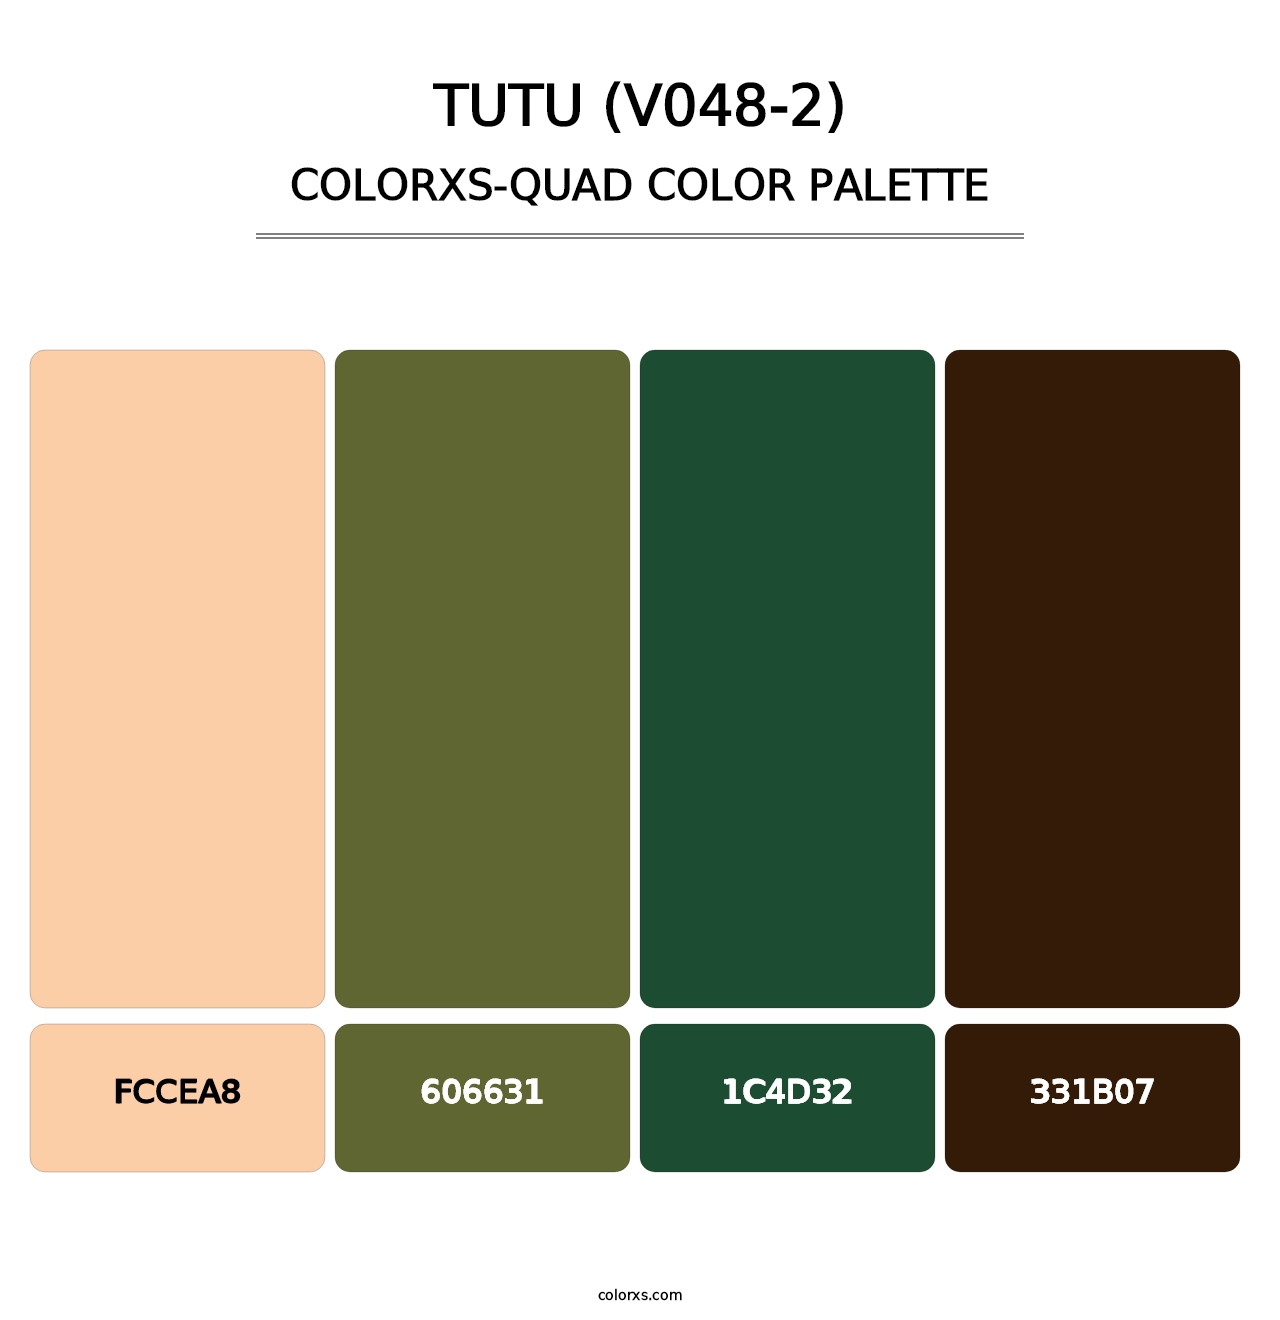 Tutu (V048-2) - Colorxs Quad Palette